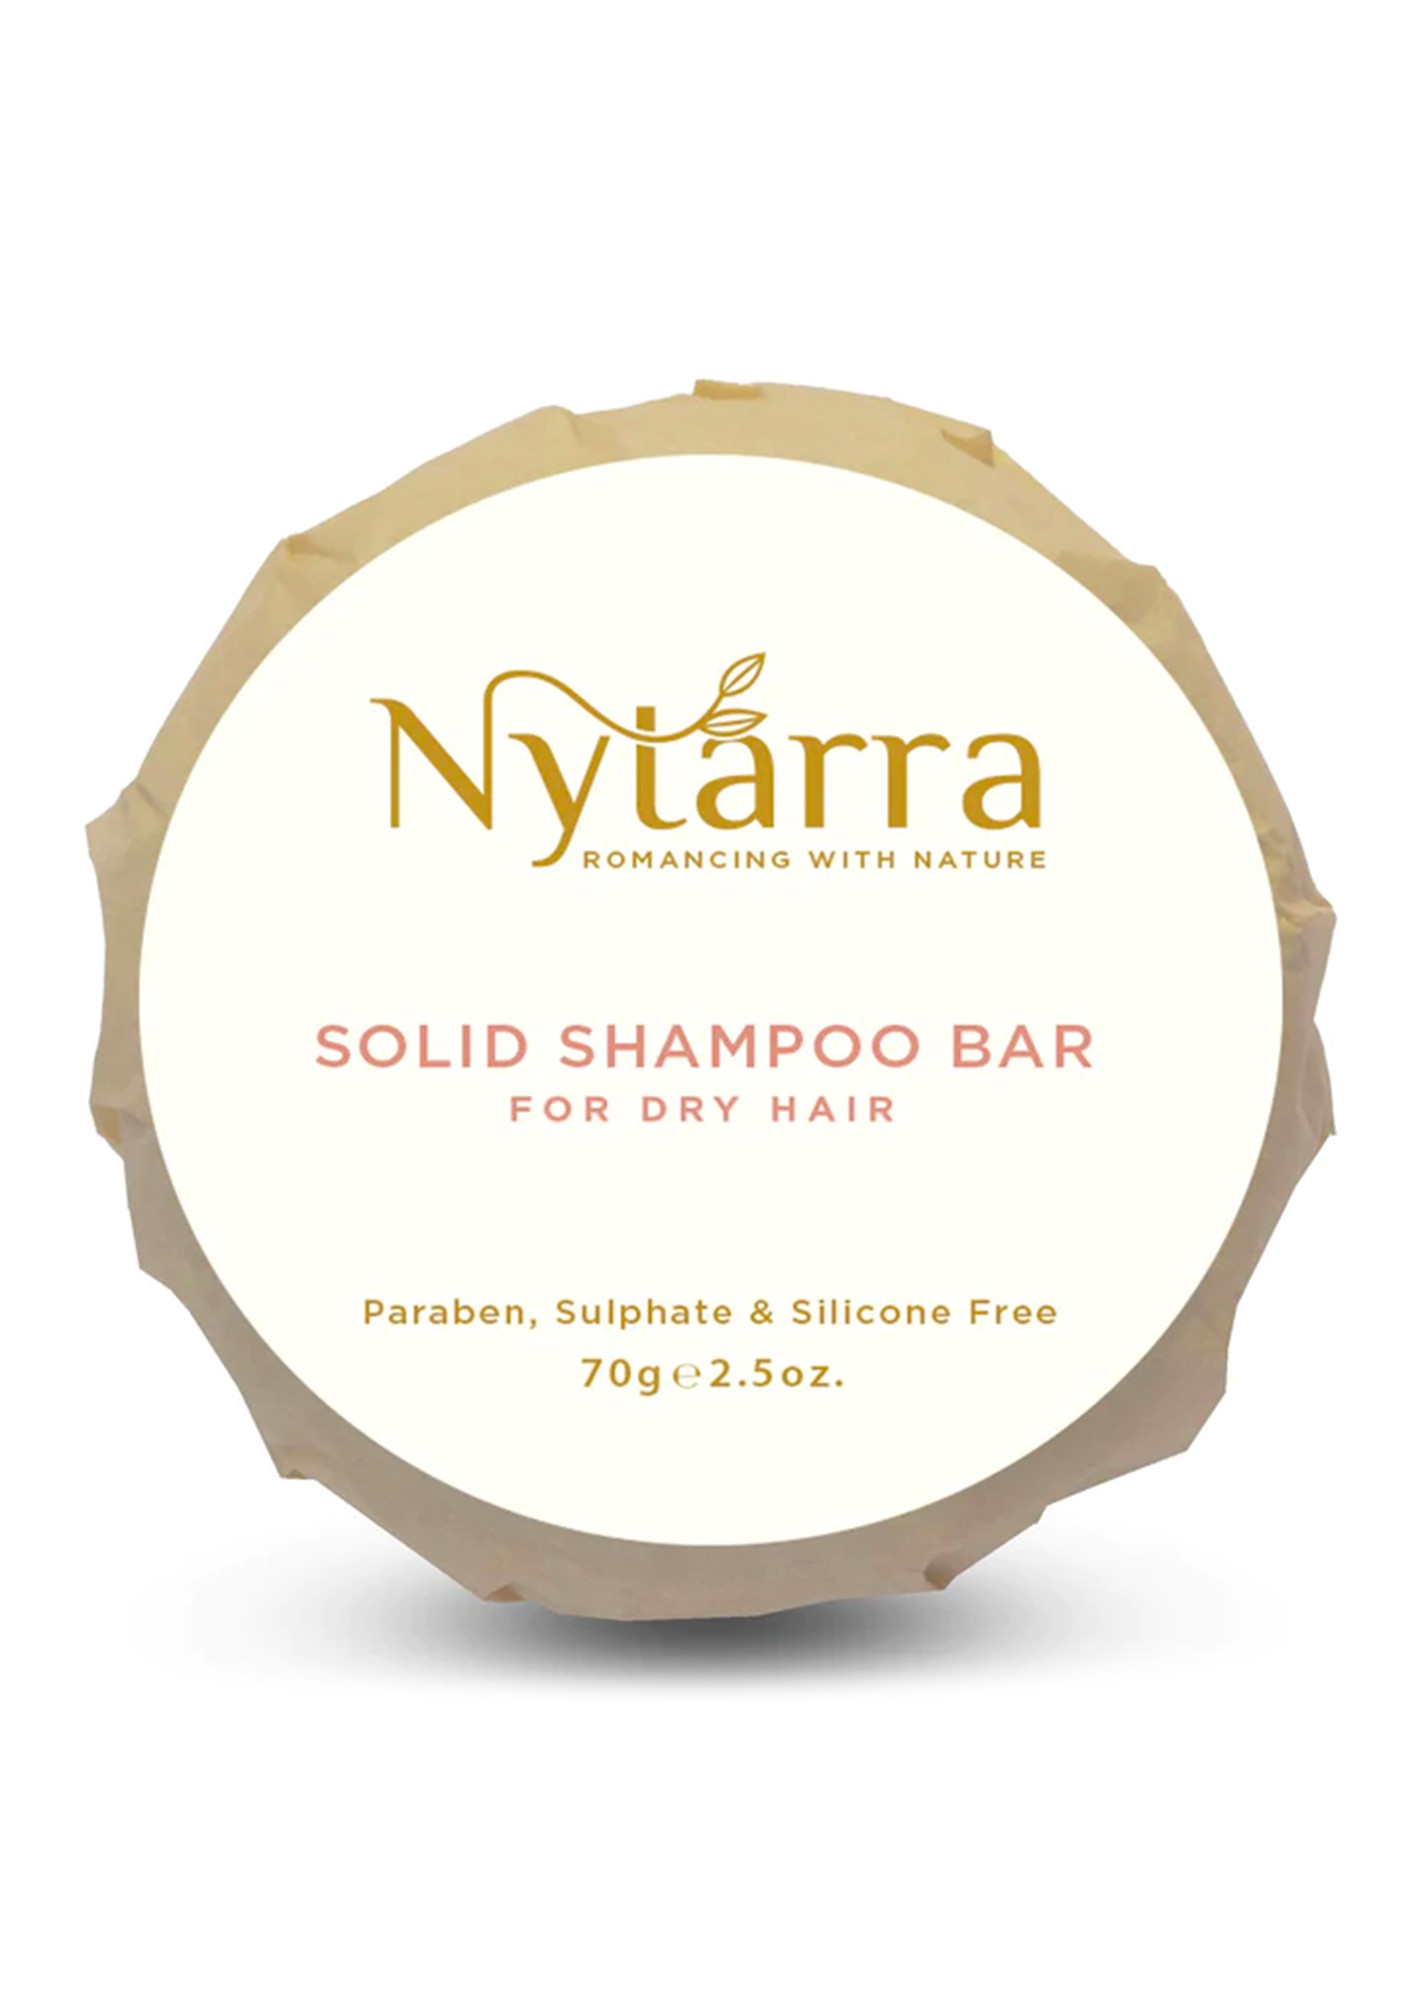 Top 7 Shampoo Bars for Dry Hair  Euronews